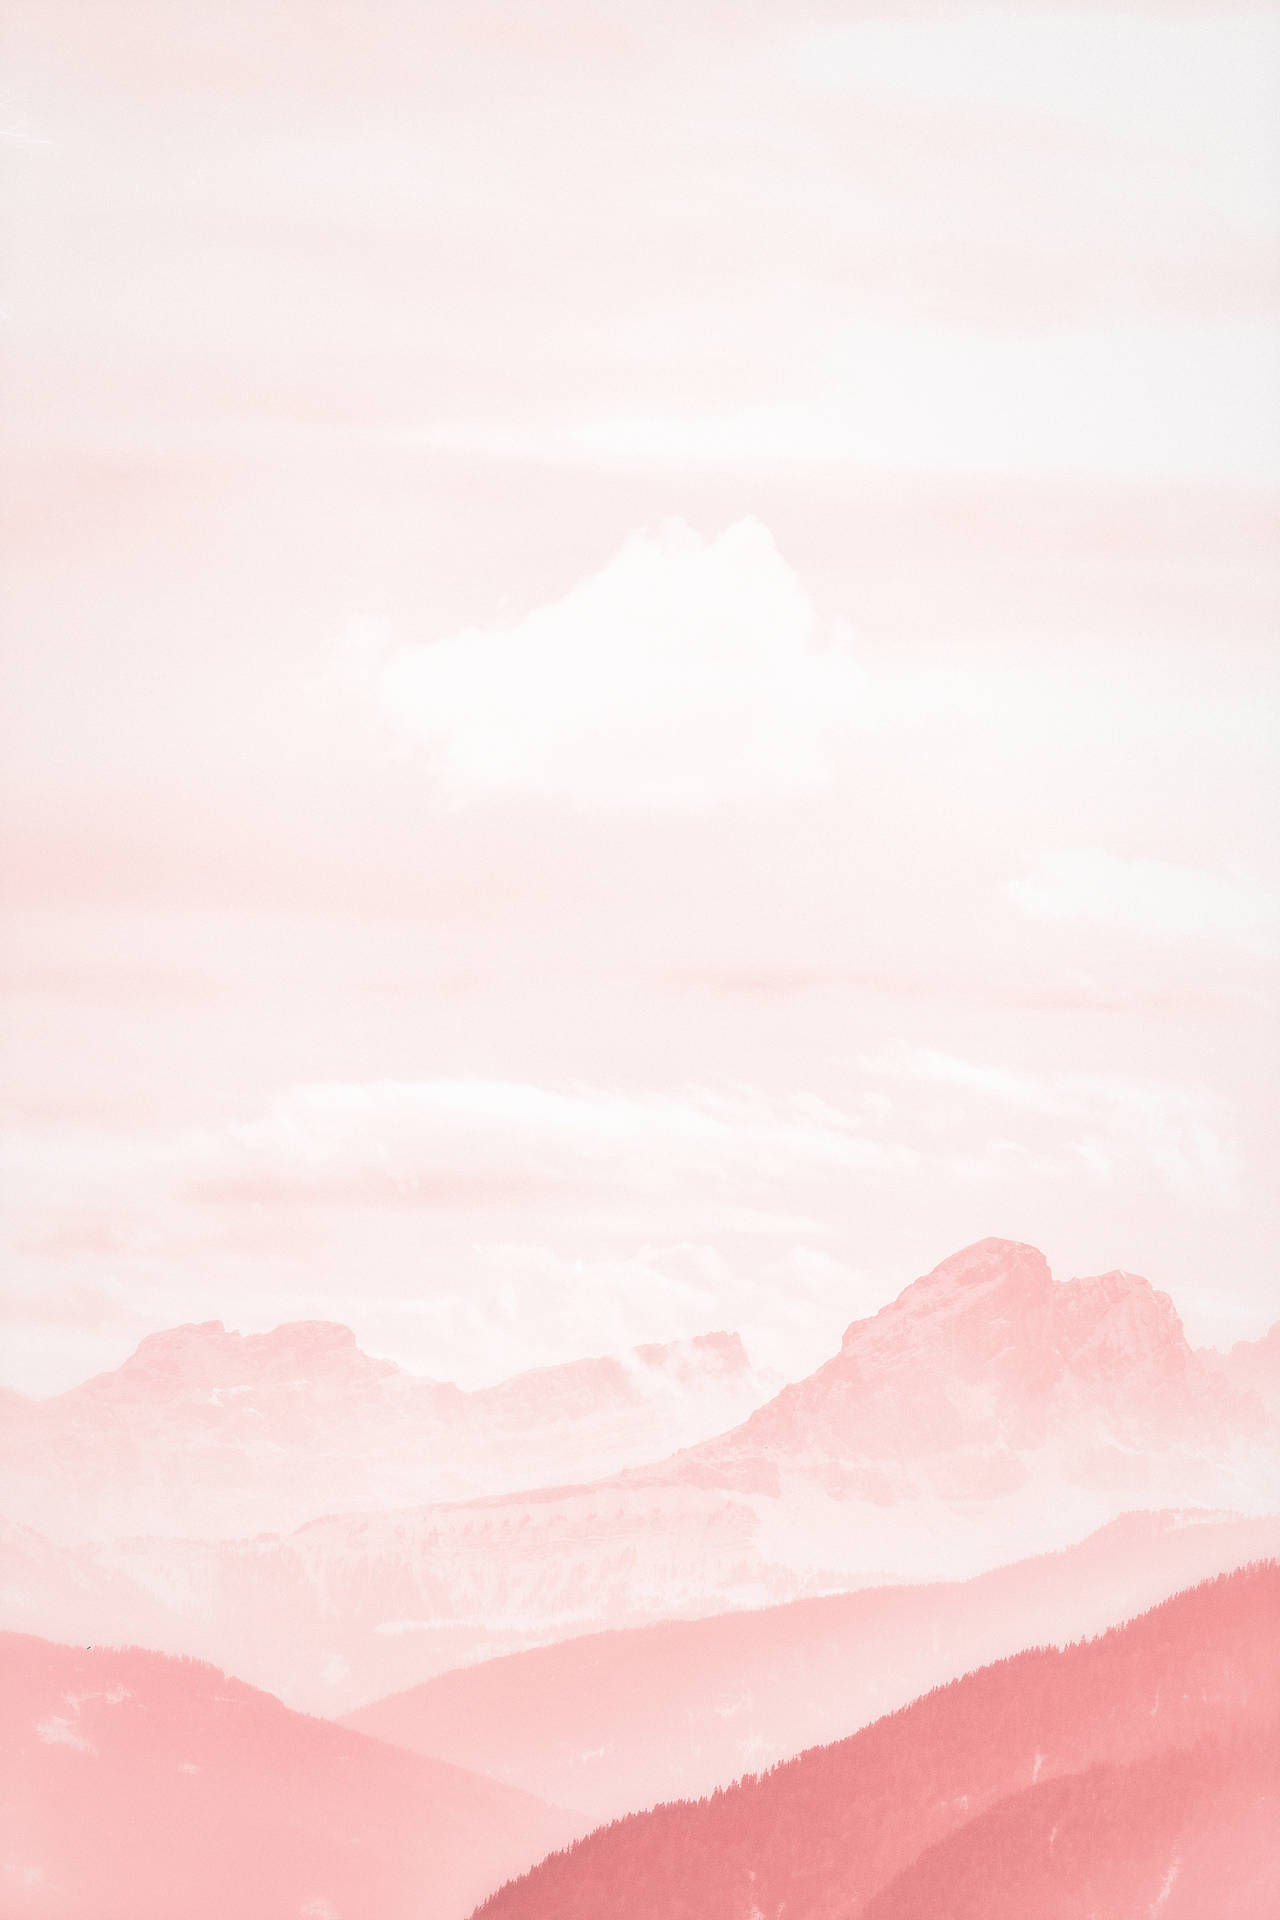 Calm Aesthetic Pink Mountain